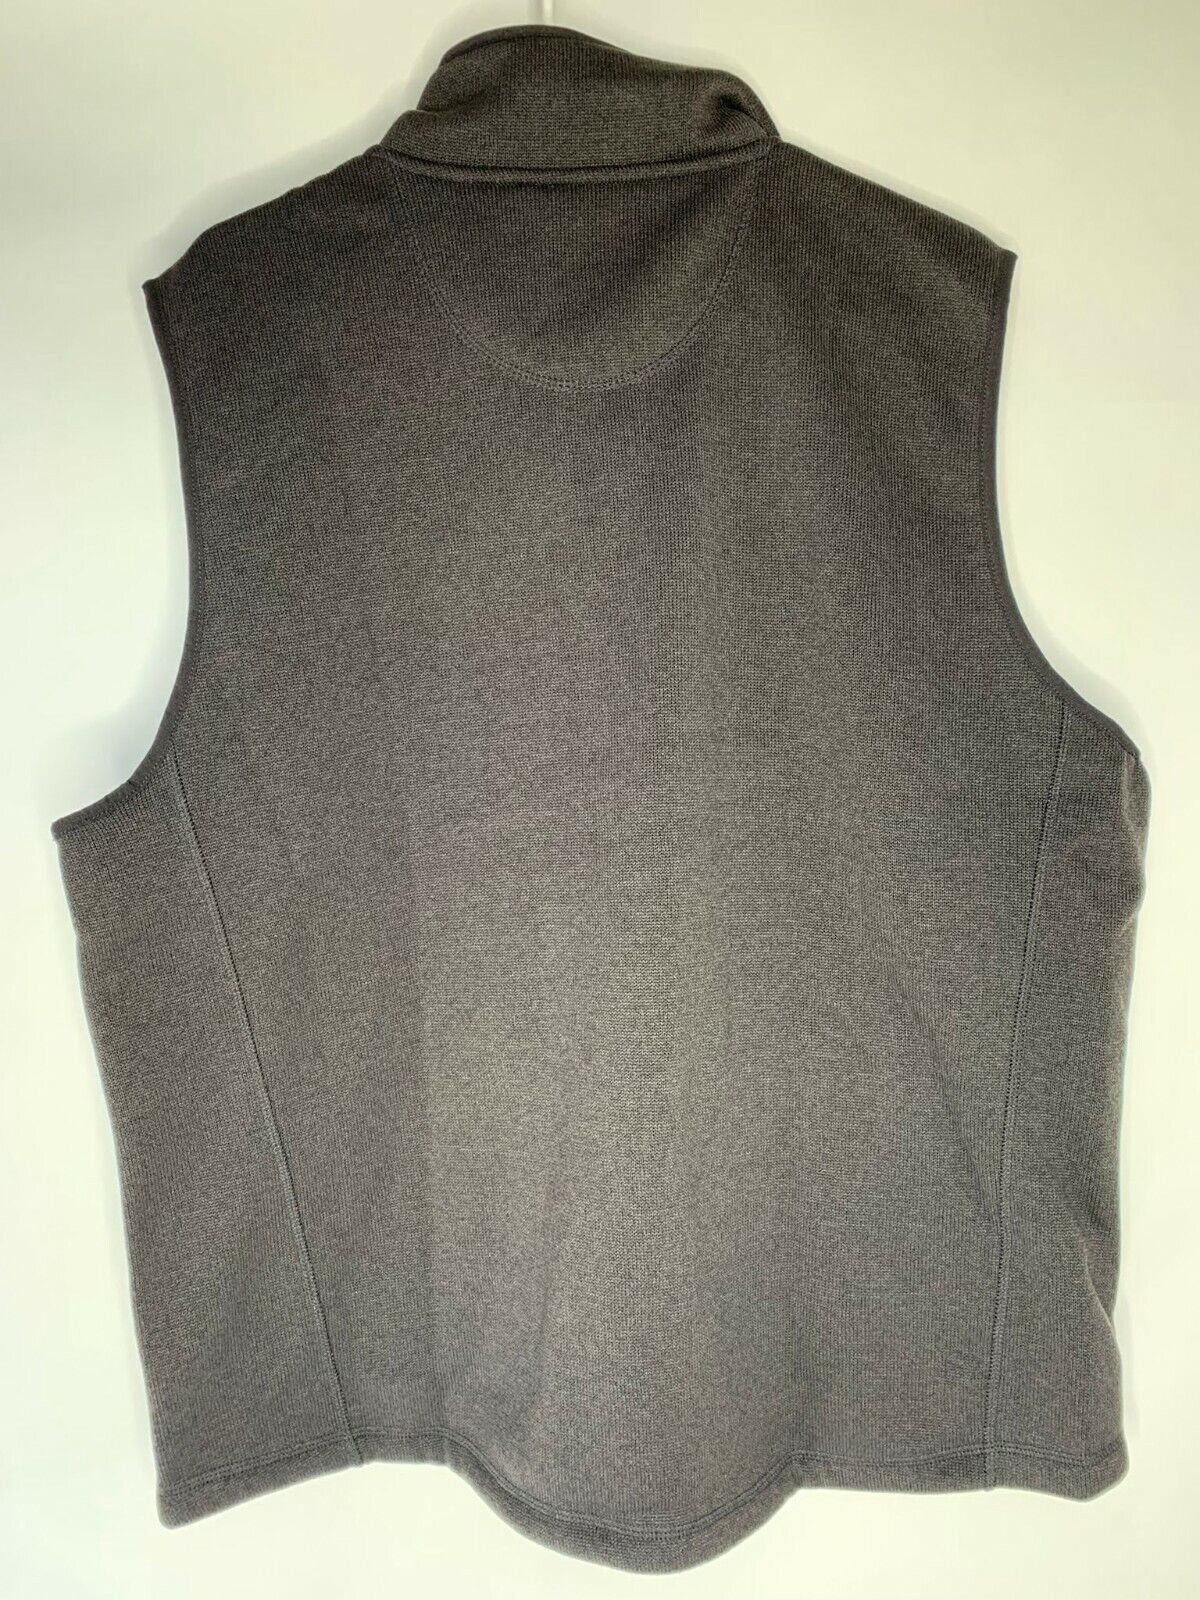 LL Bean Mens XL Bean's Sweater Fleece Vest CallMiner Classic Black Zip SW502209